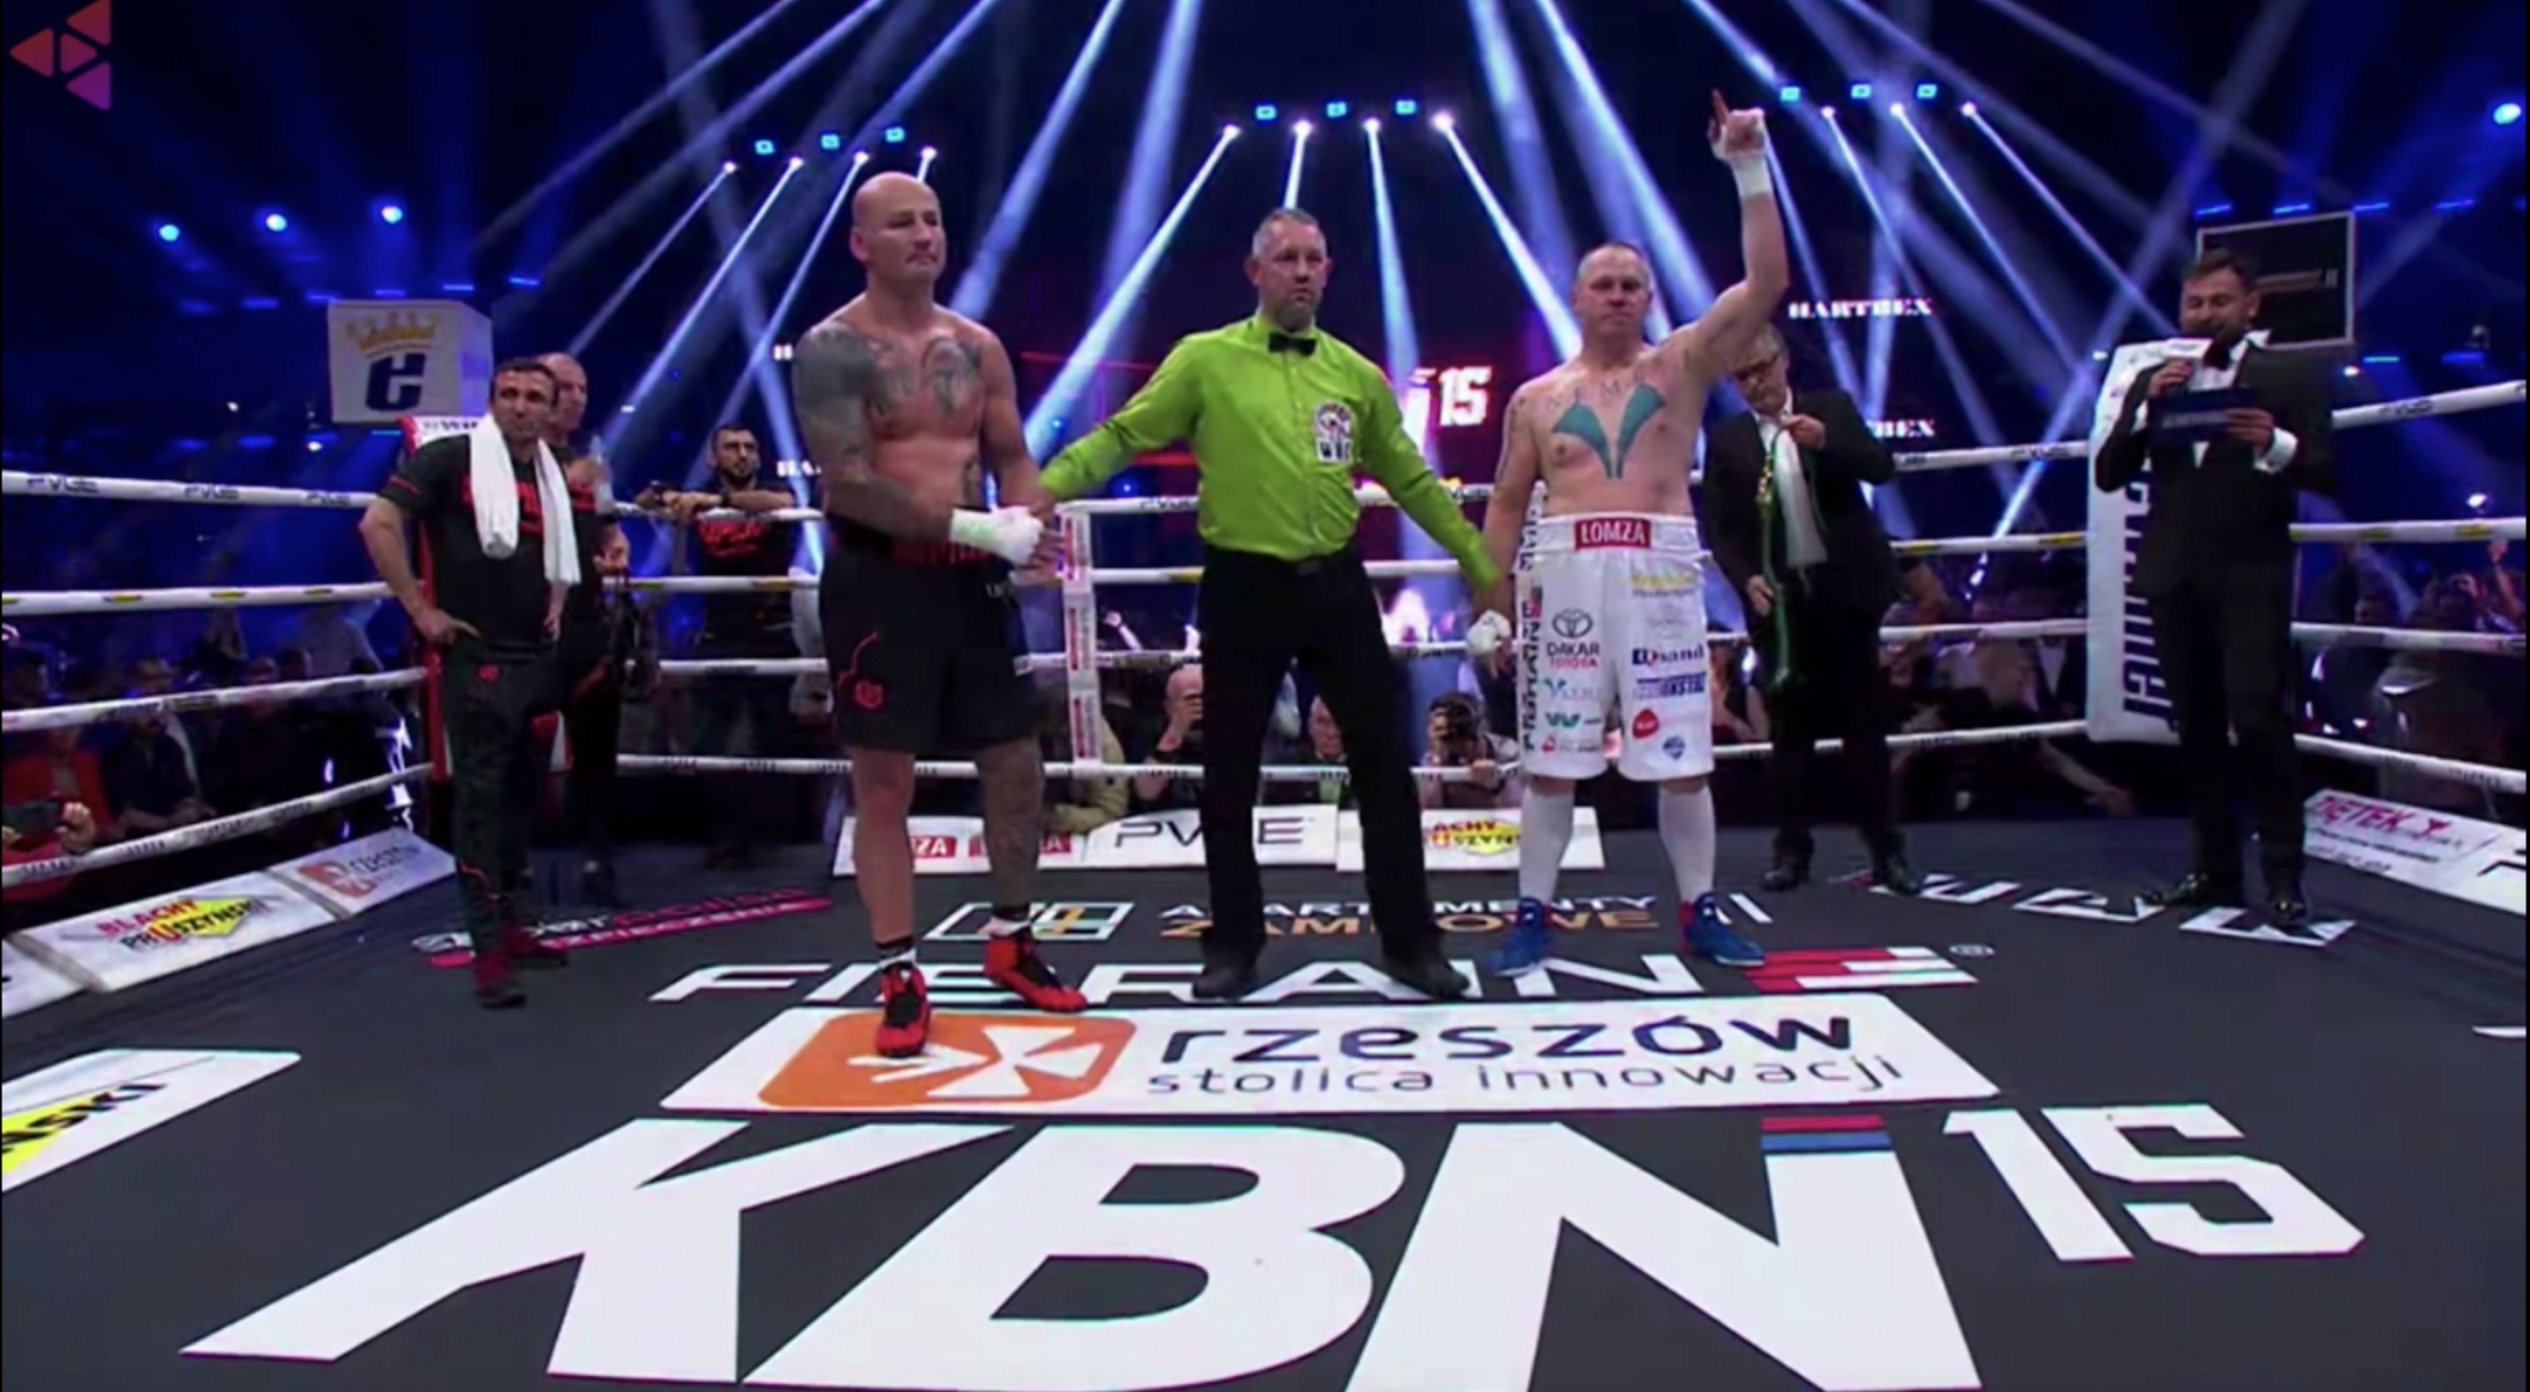 Lukasz Rozanski KOs Artur Szpilka For WBC International Bridger Title | Boxen247.com